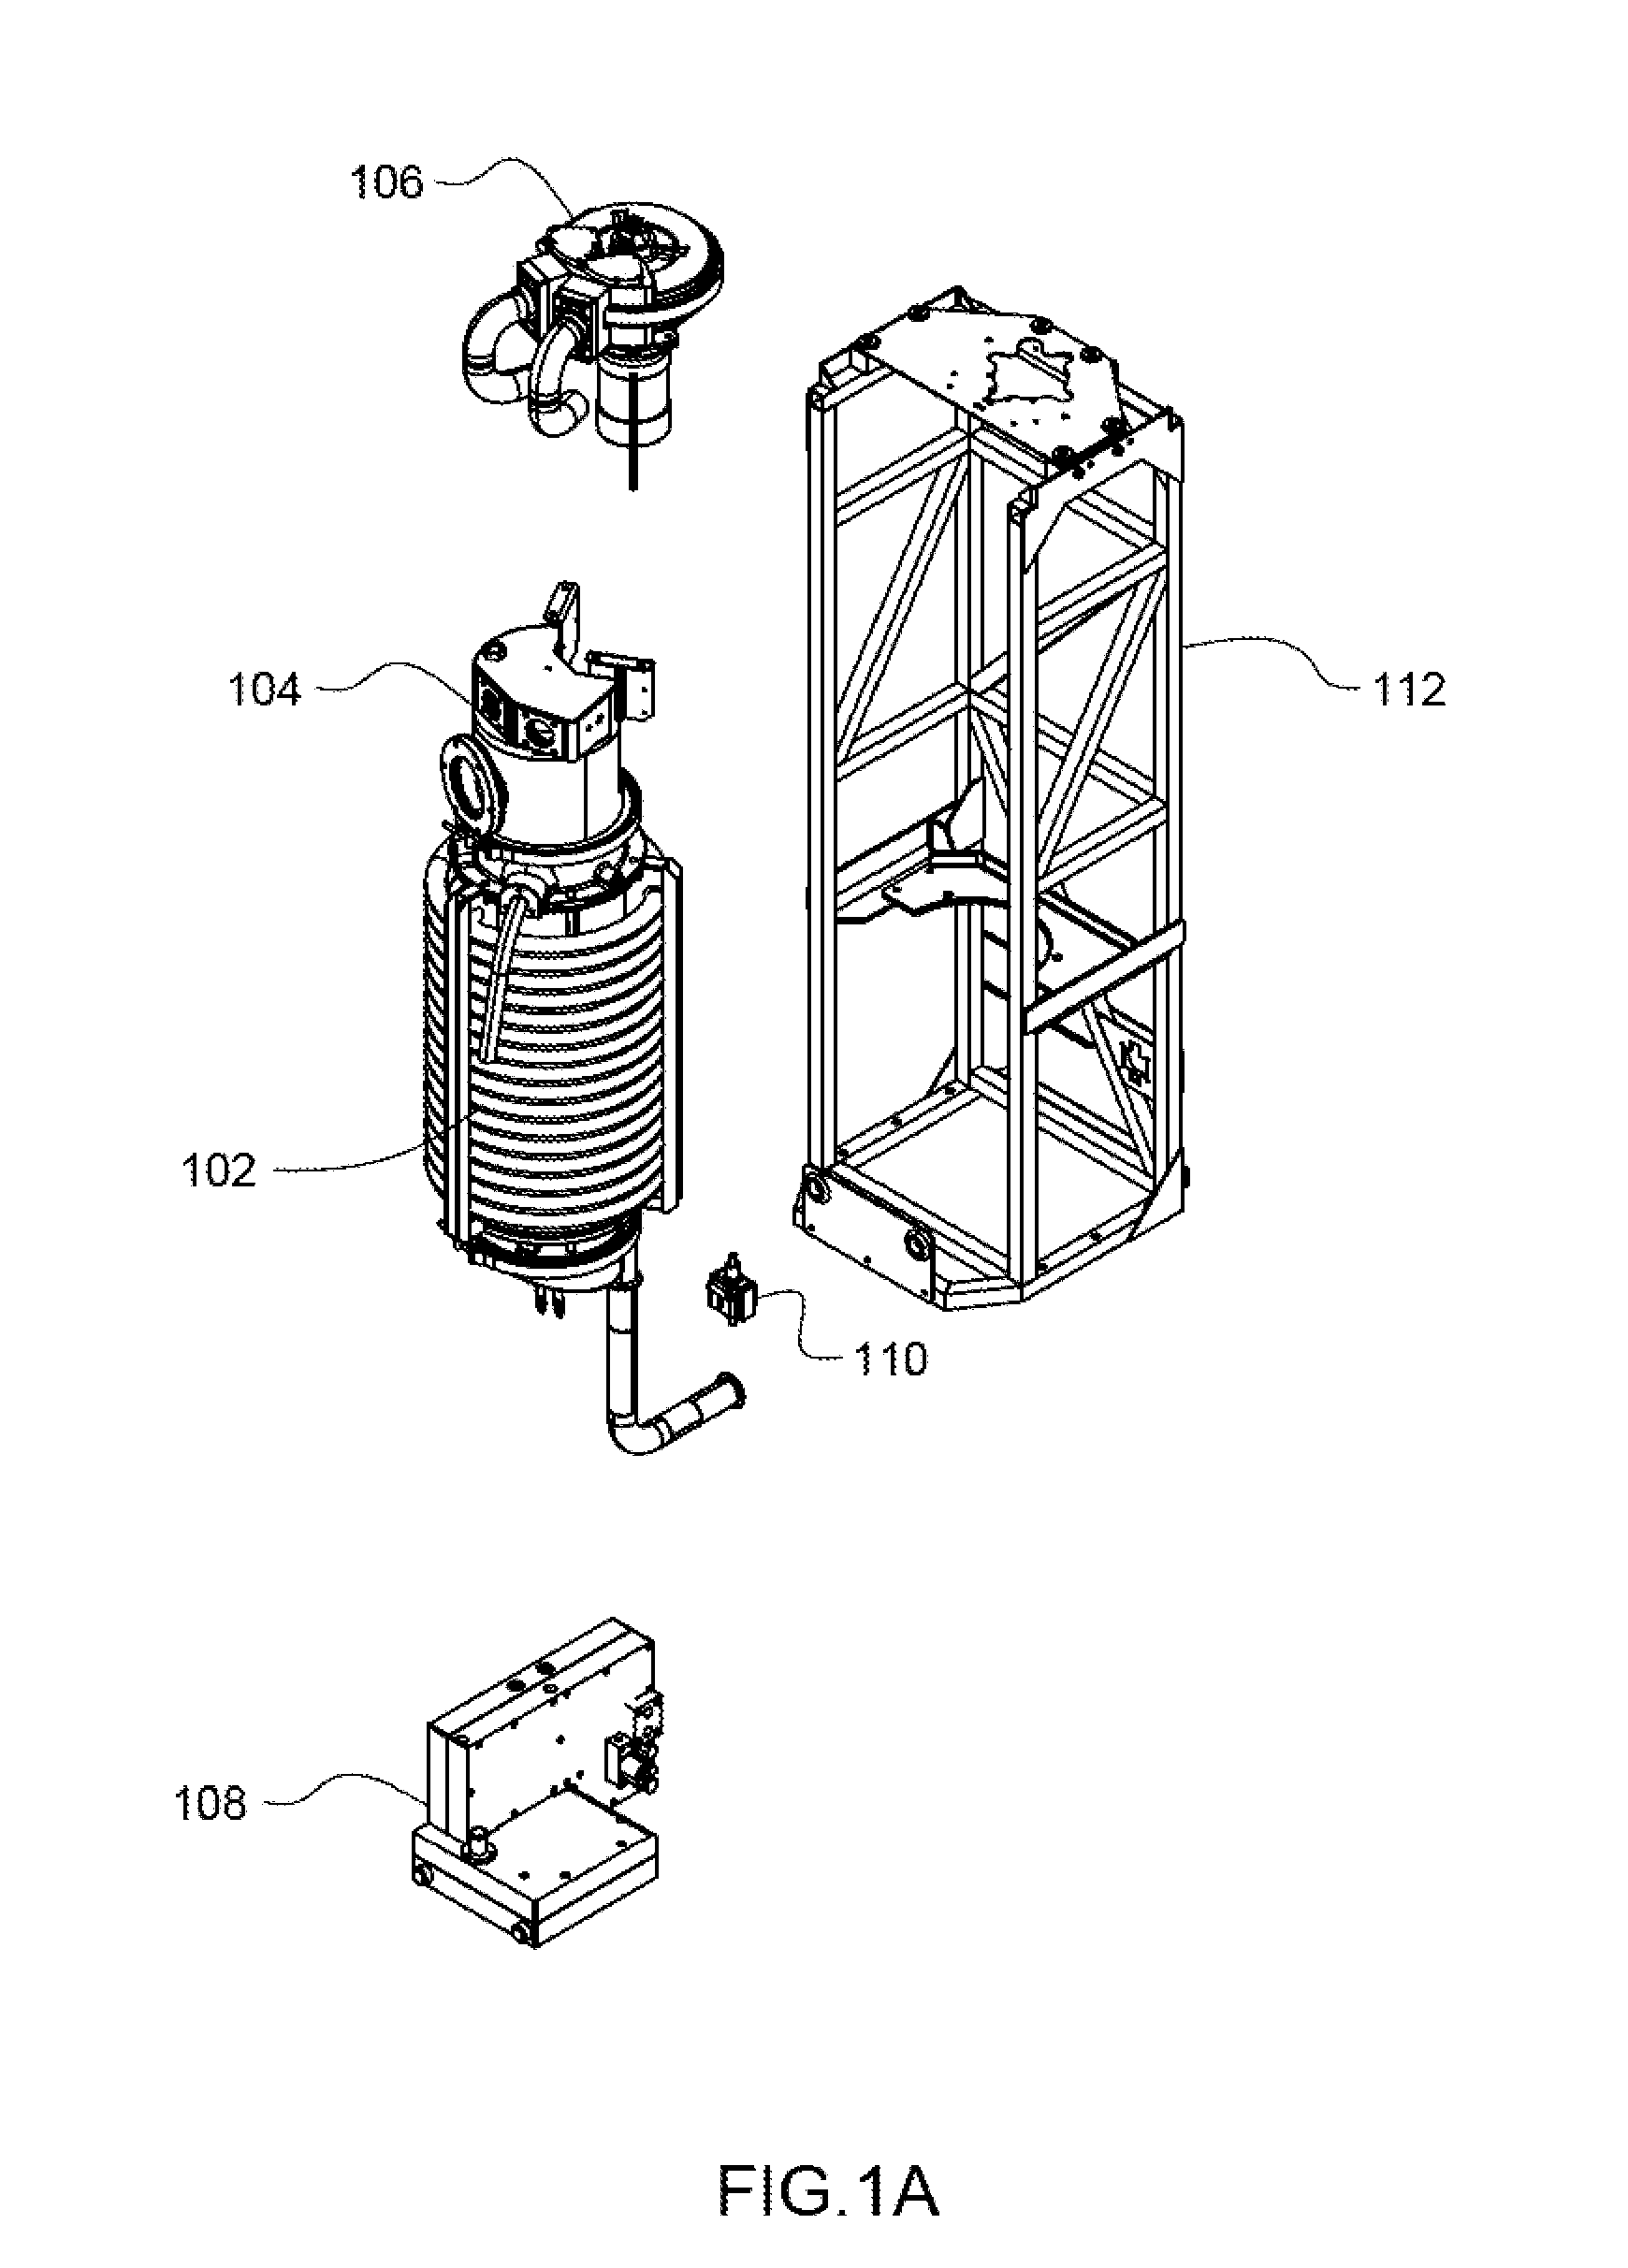 Water Vapor Distillation Apparatus, Method and System